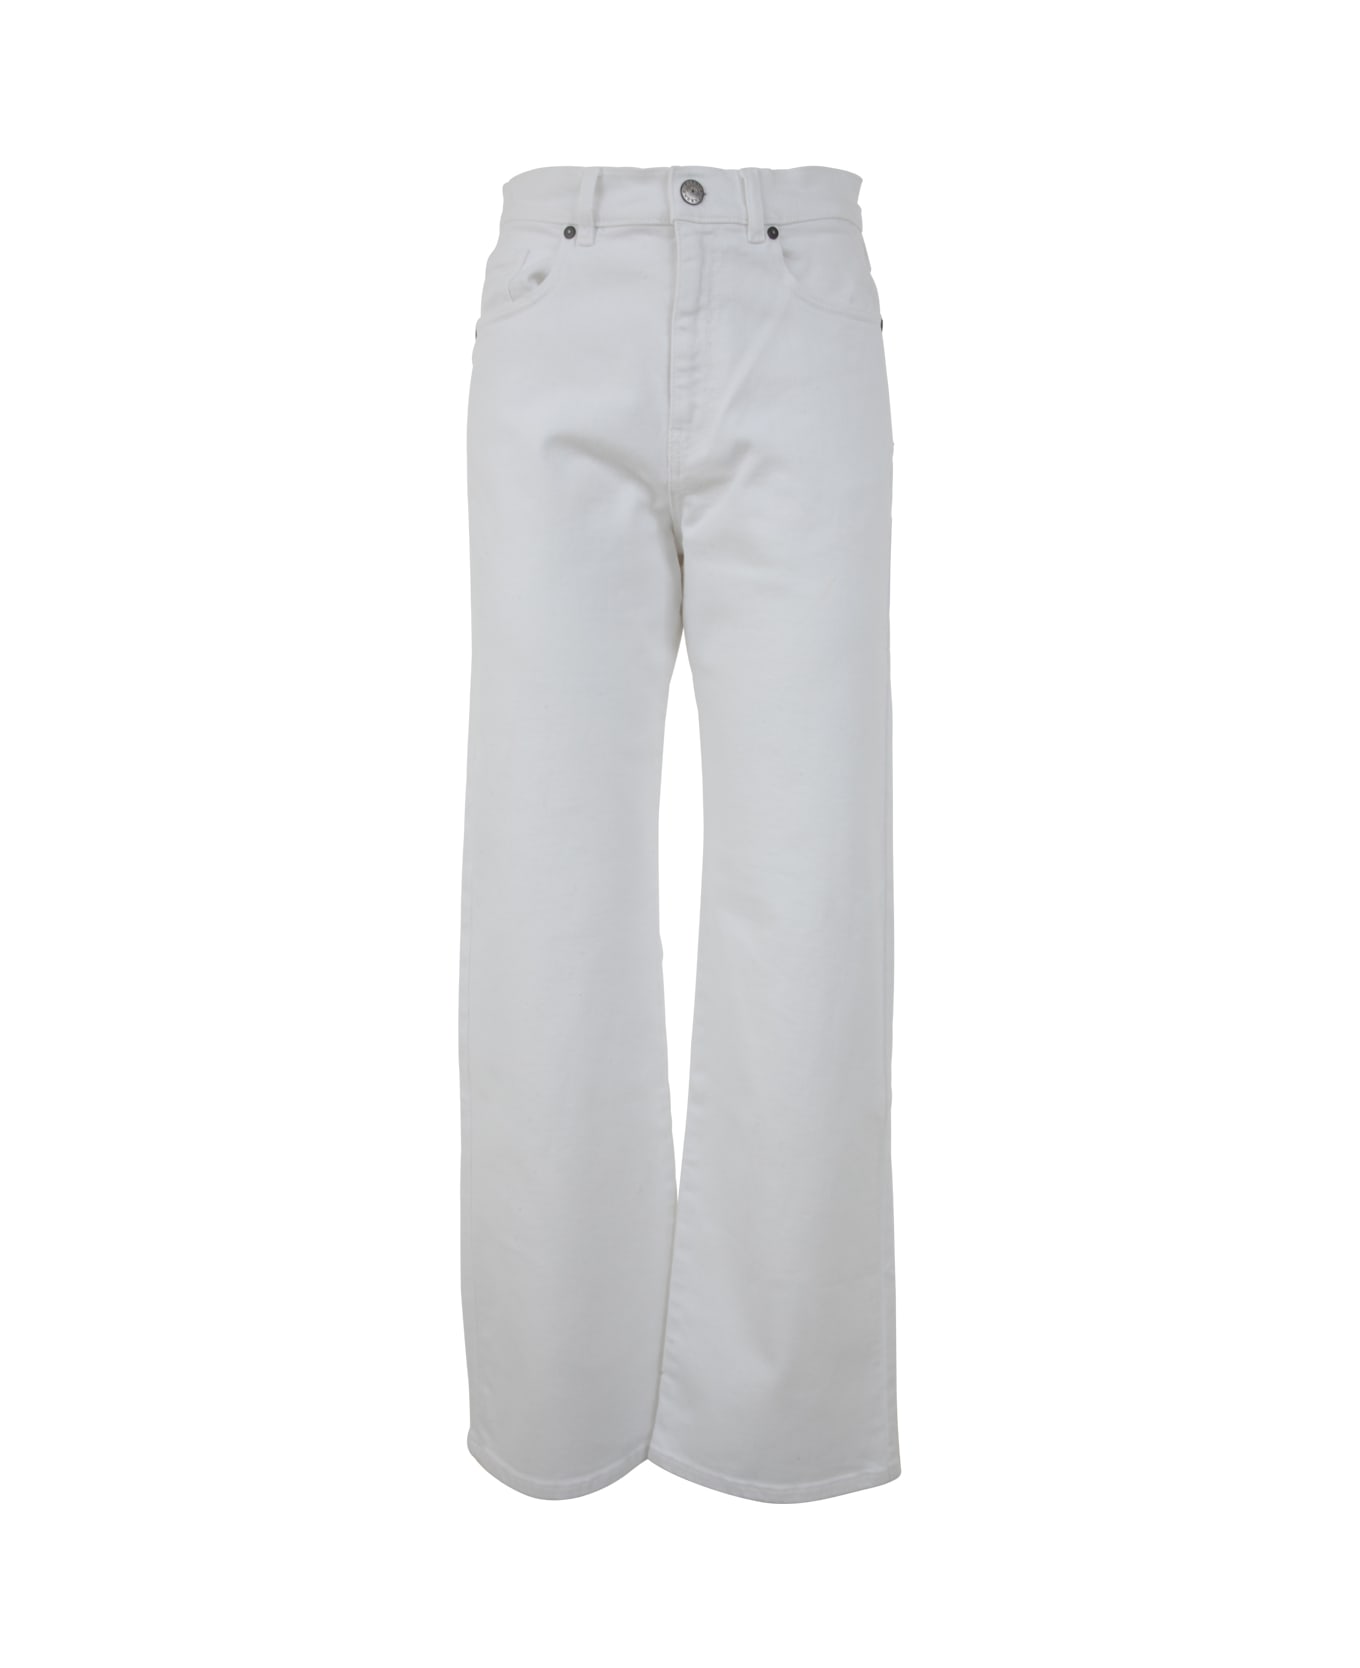 Parosh Drill Cotton Trousers - White